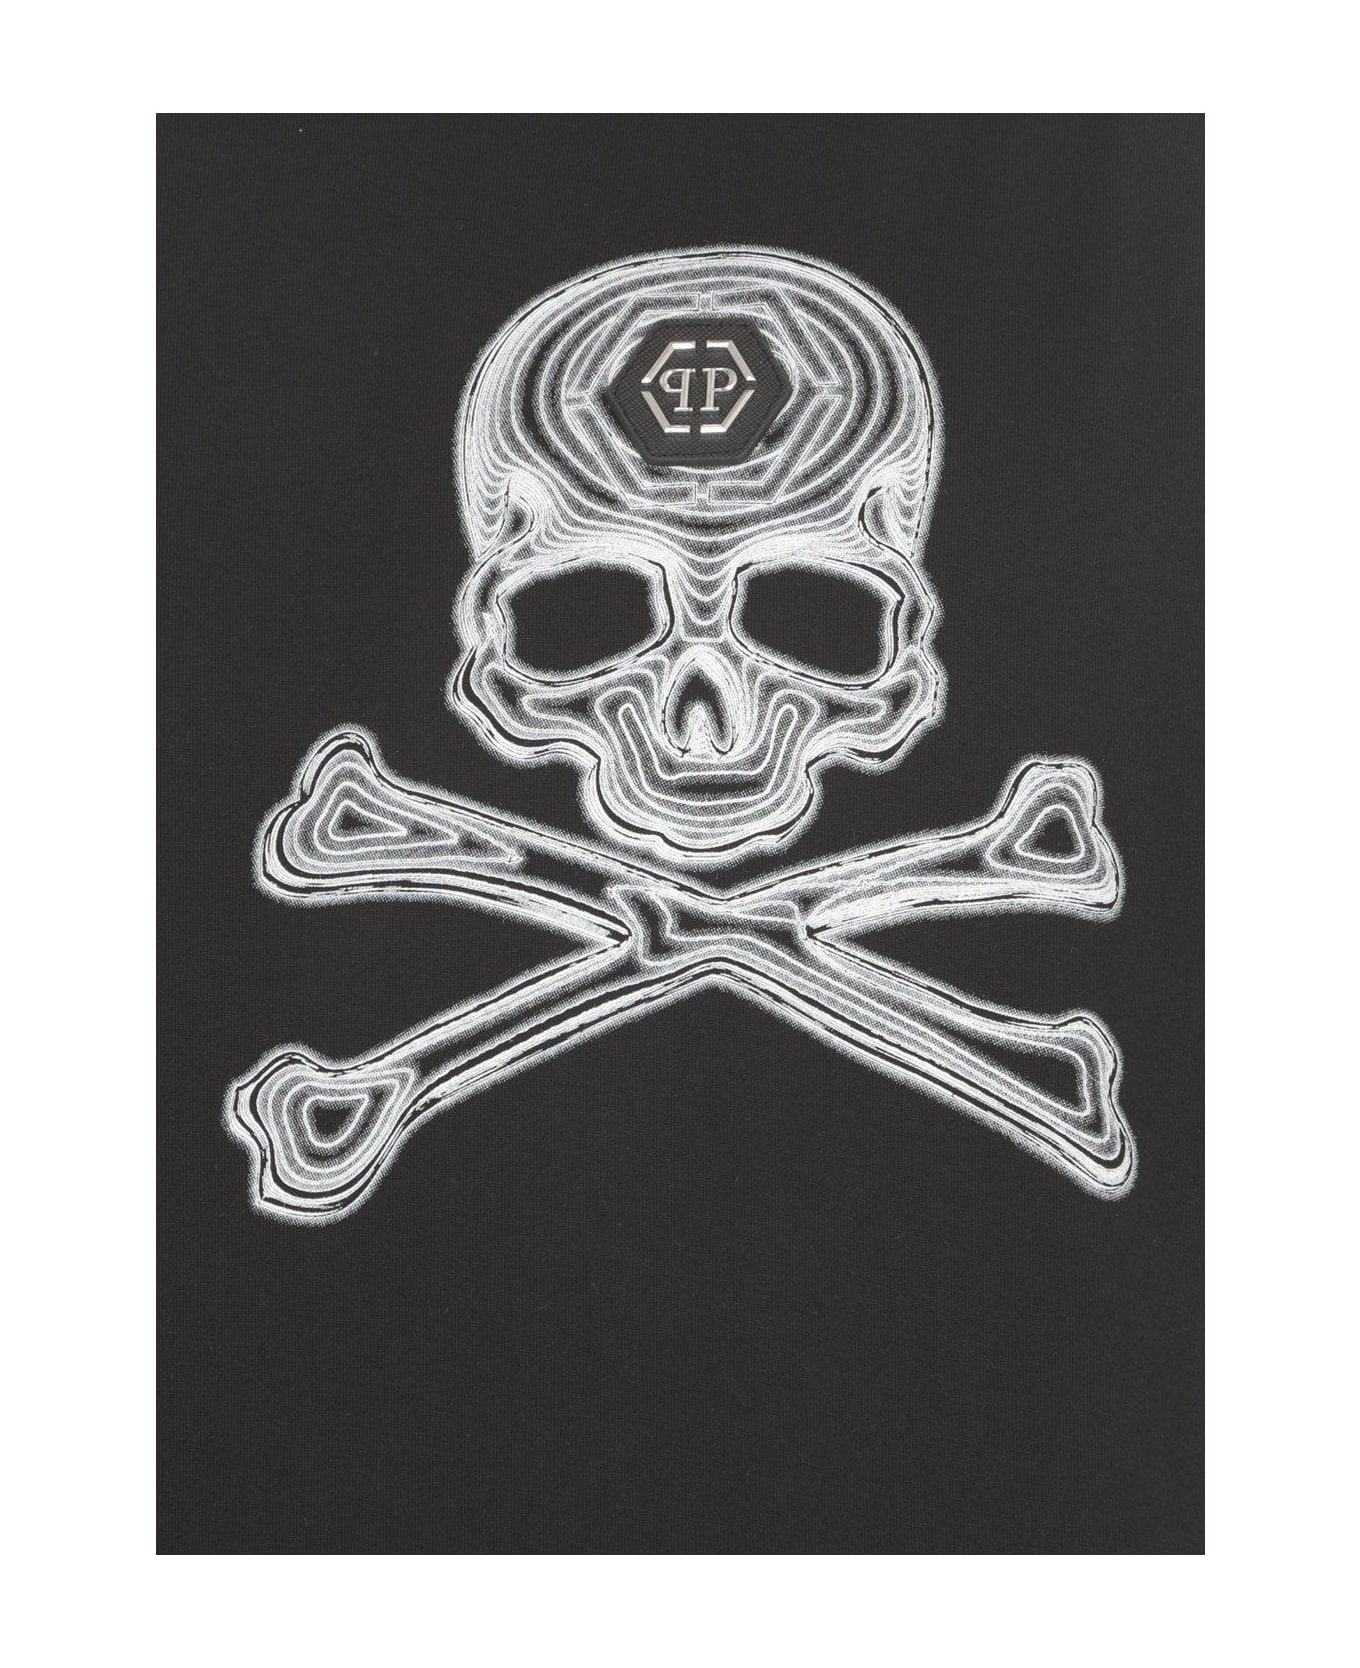 Philipp Plein Skull Bone Printed Crewneck T-shirt - Nero